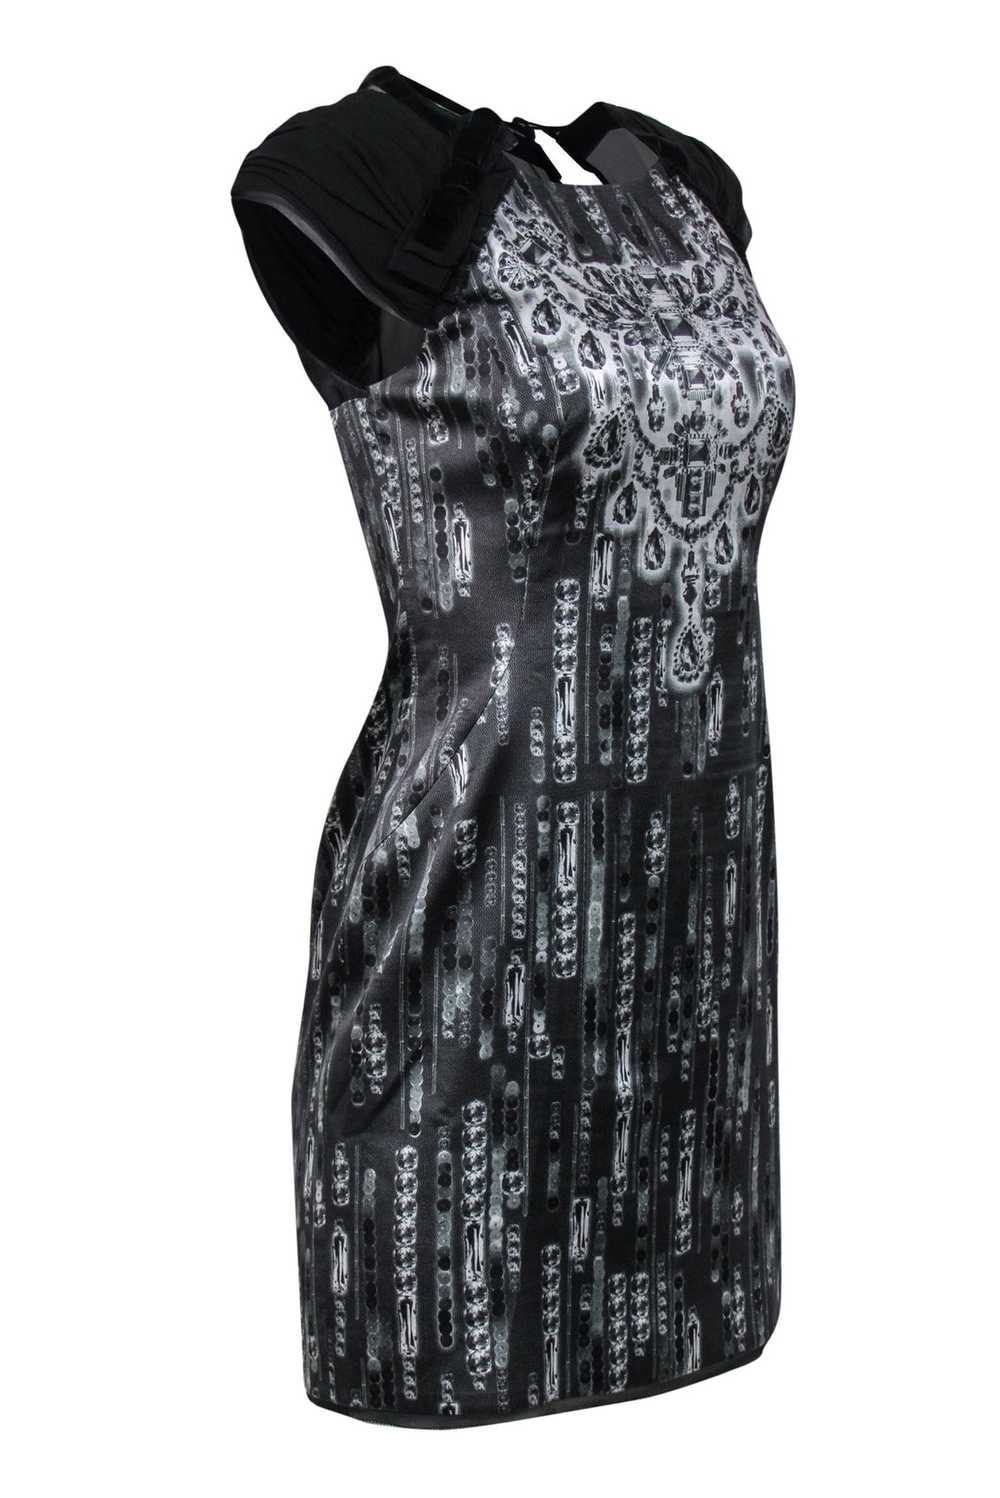 Karen Millen - Black Diamond Print Sheath Dress w… - image 2